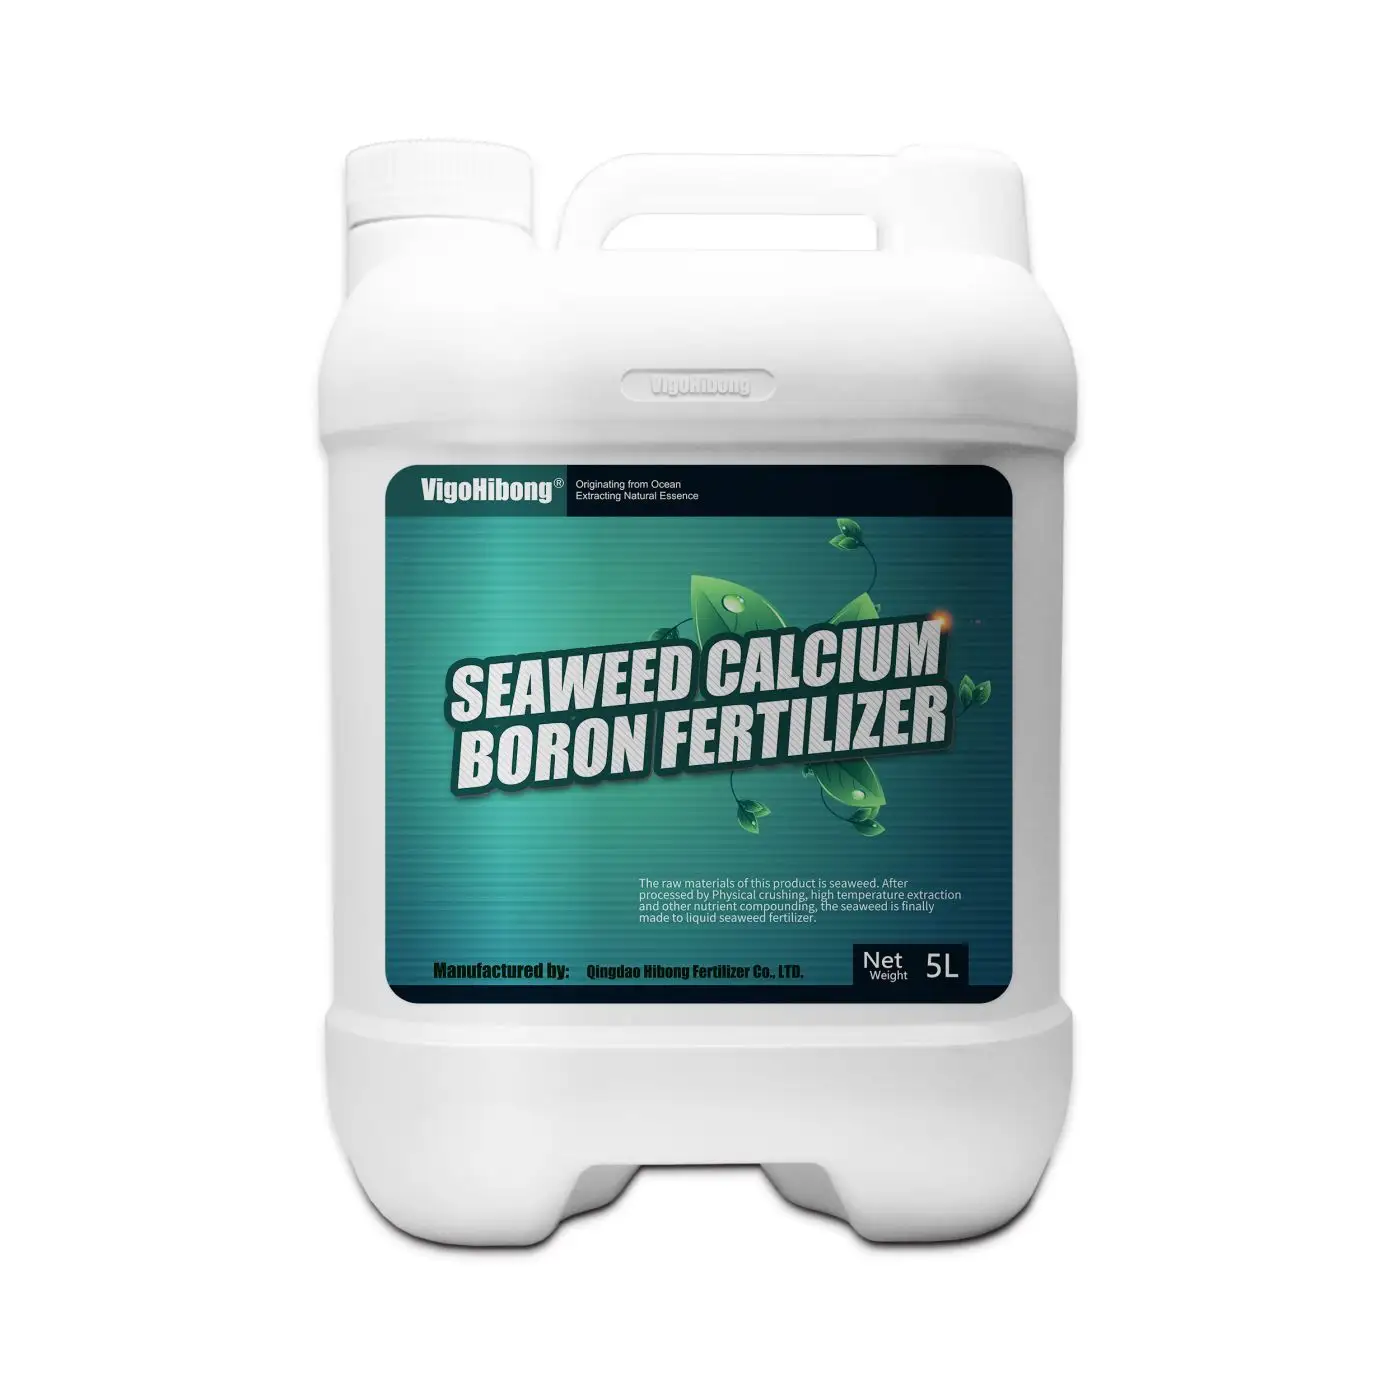 Pupuk kalsium rumput laut organik Cepat Hijau 100% merek ekstrak rumput laut Kelp asam alginik untuk penggunaan pertanian